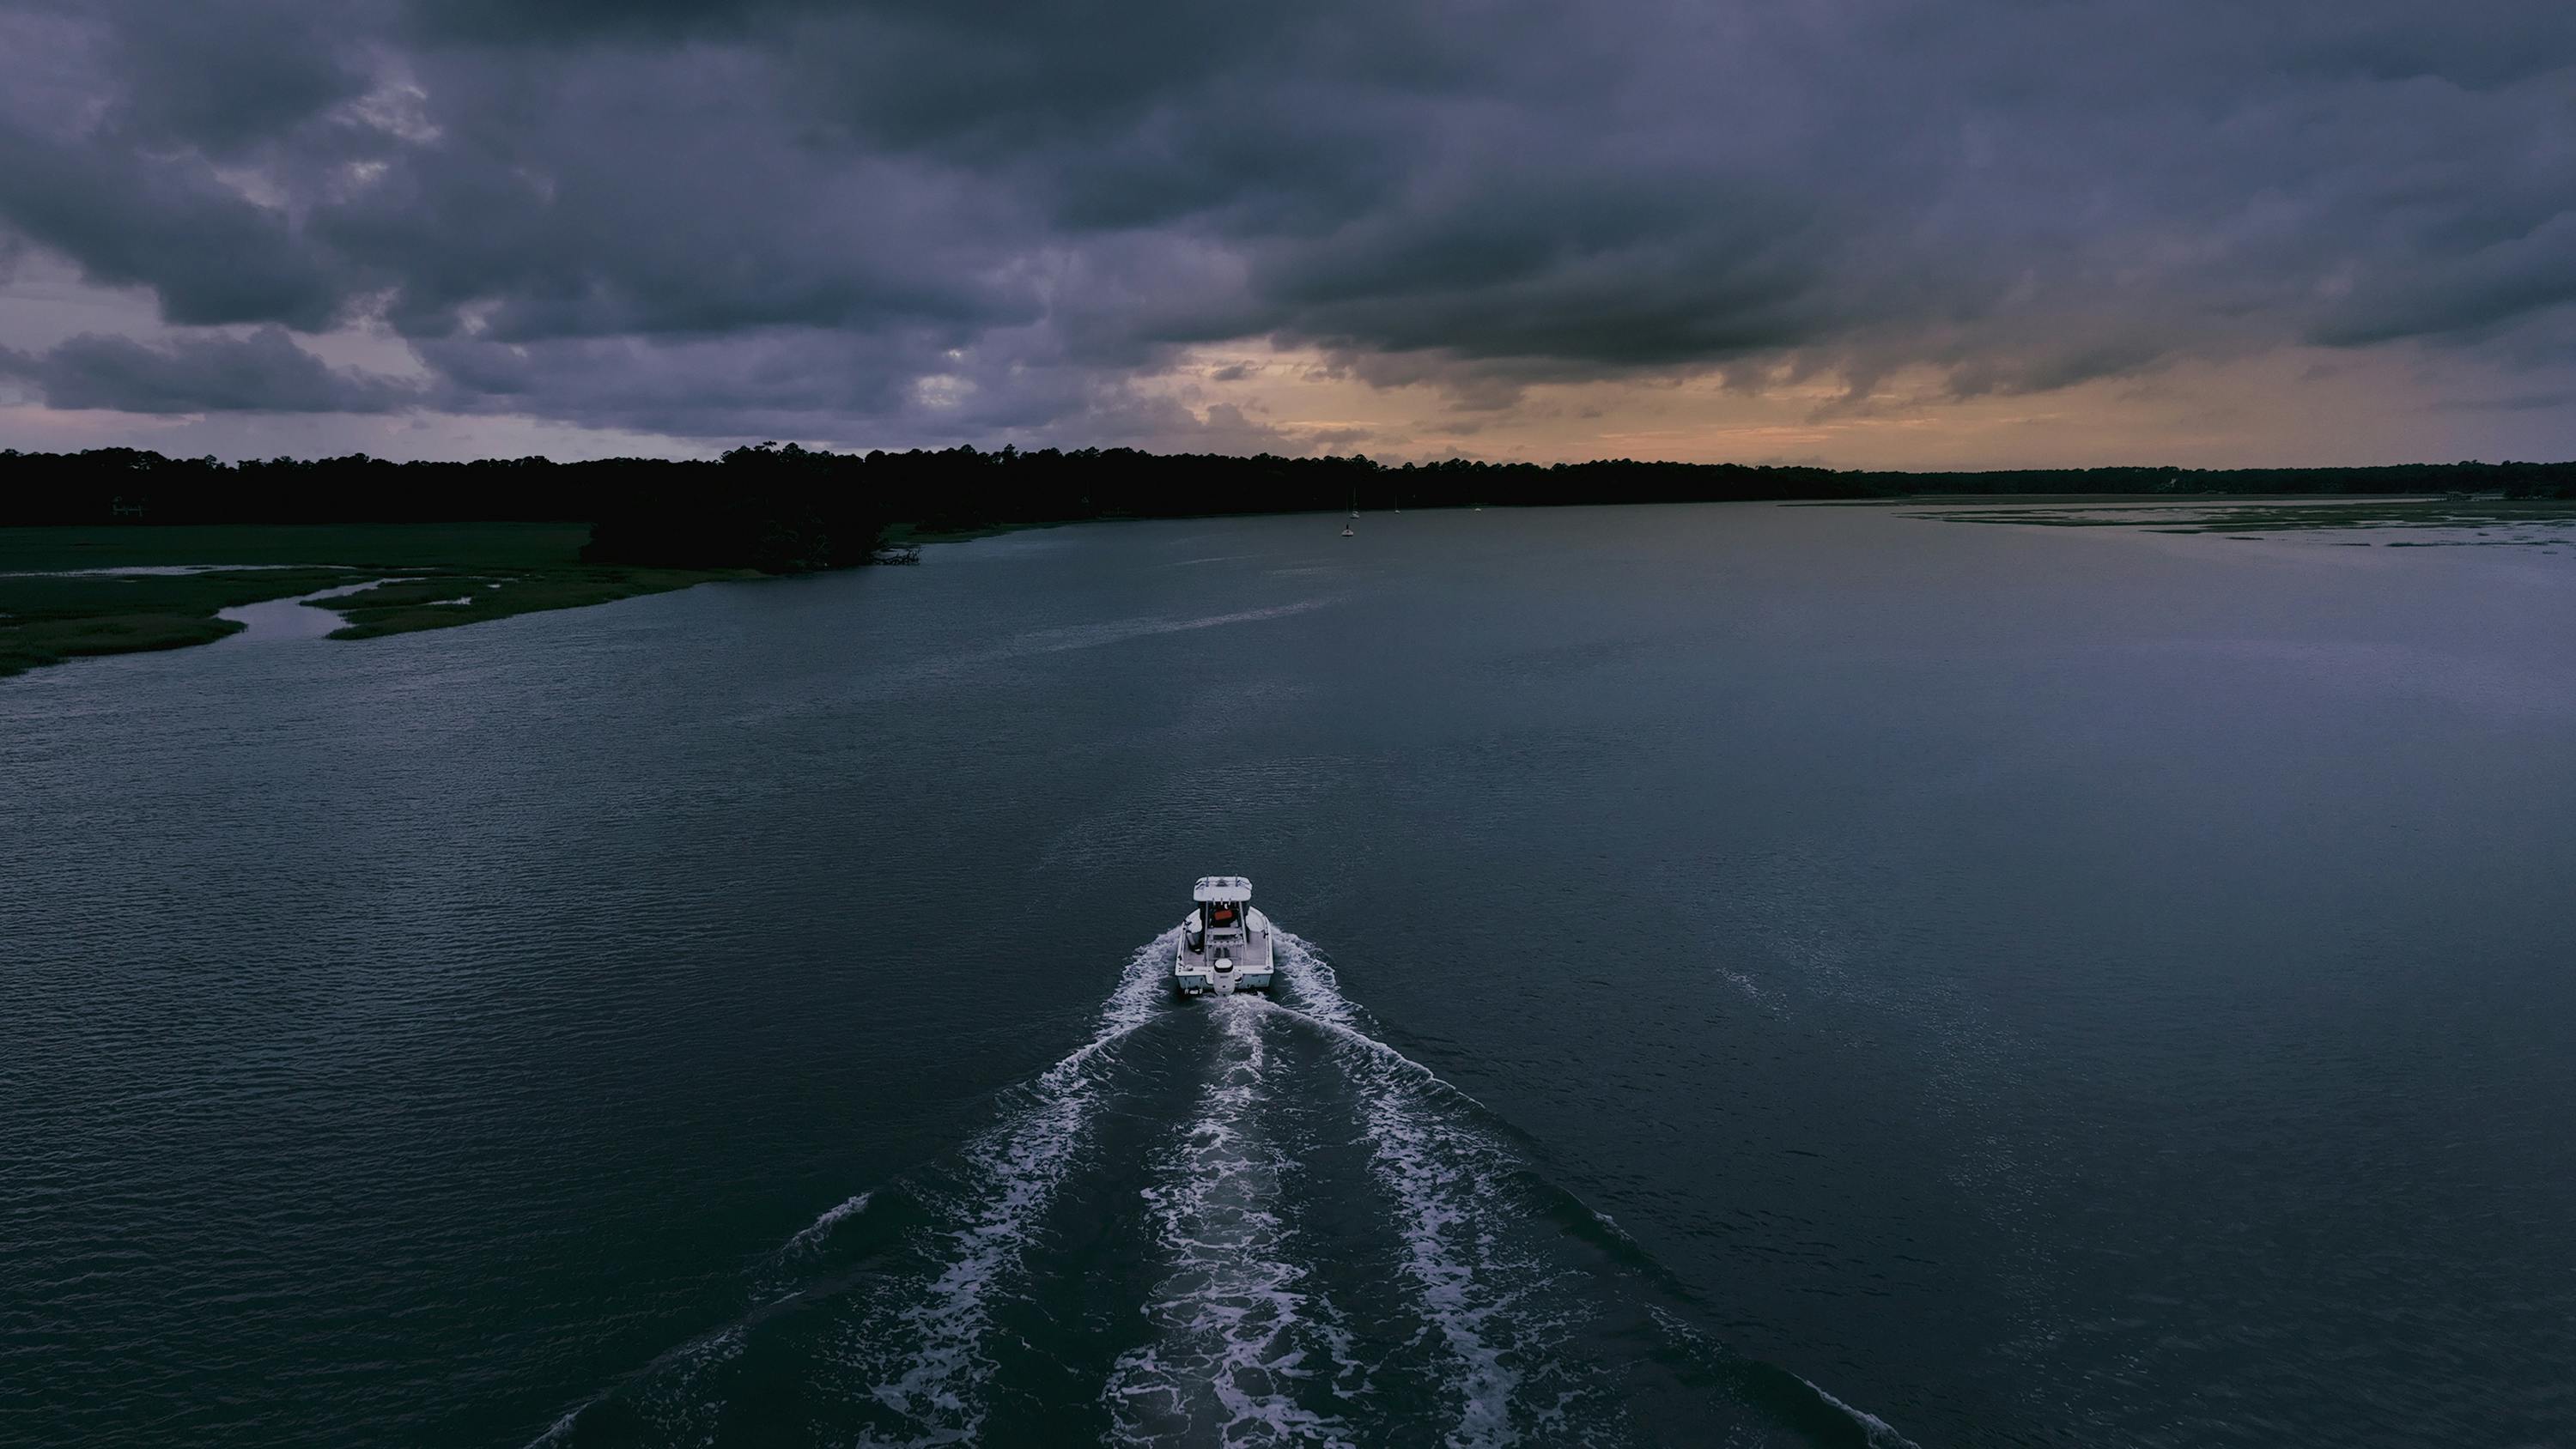 A motorboat speeds across the water under darkened skies. 